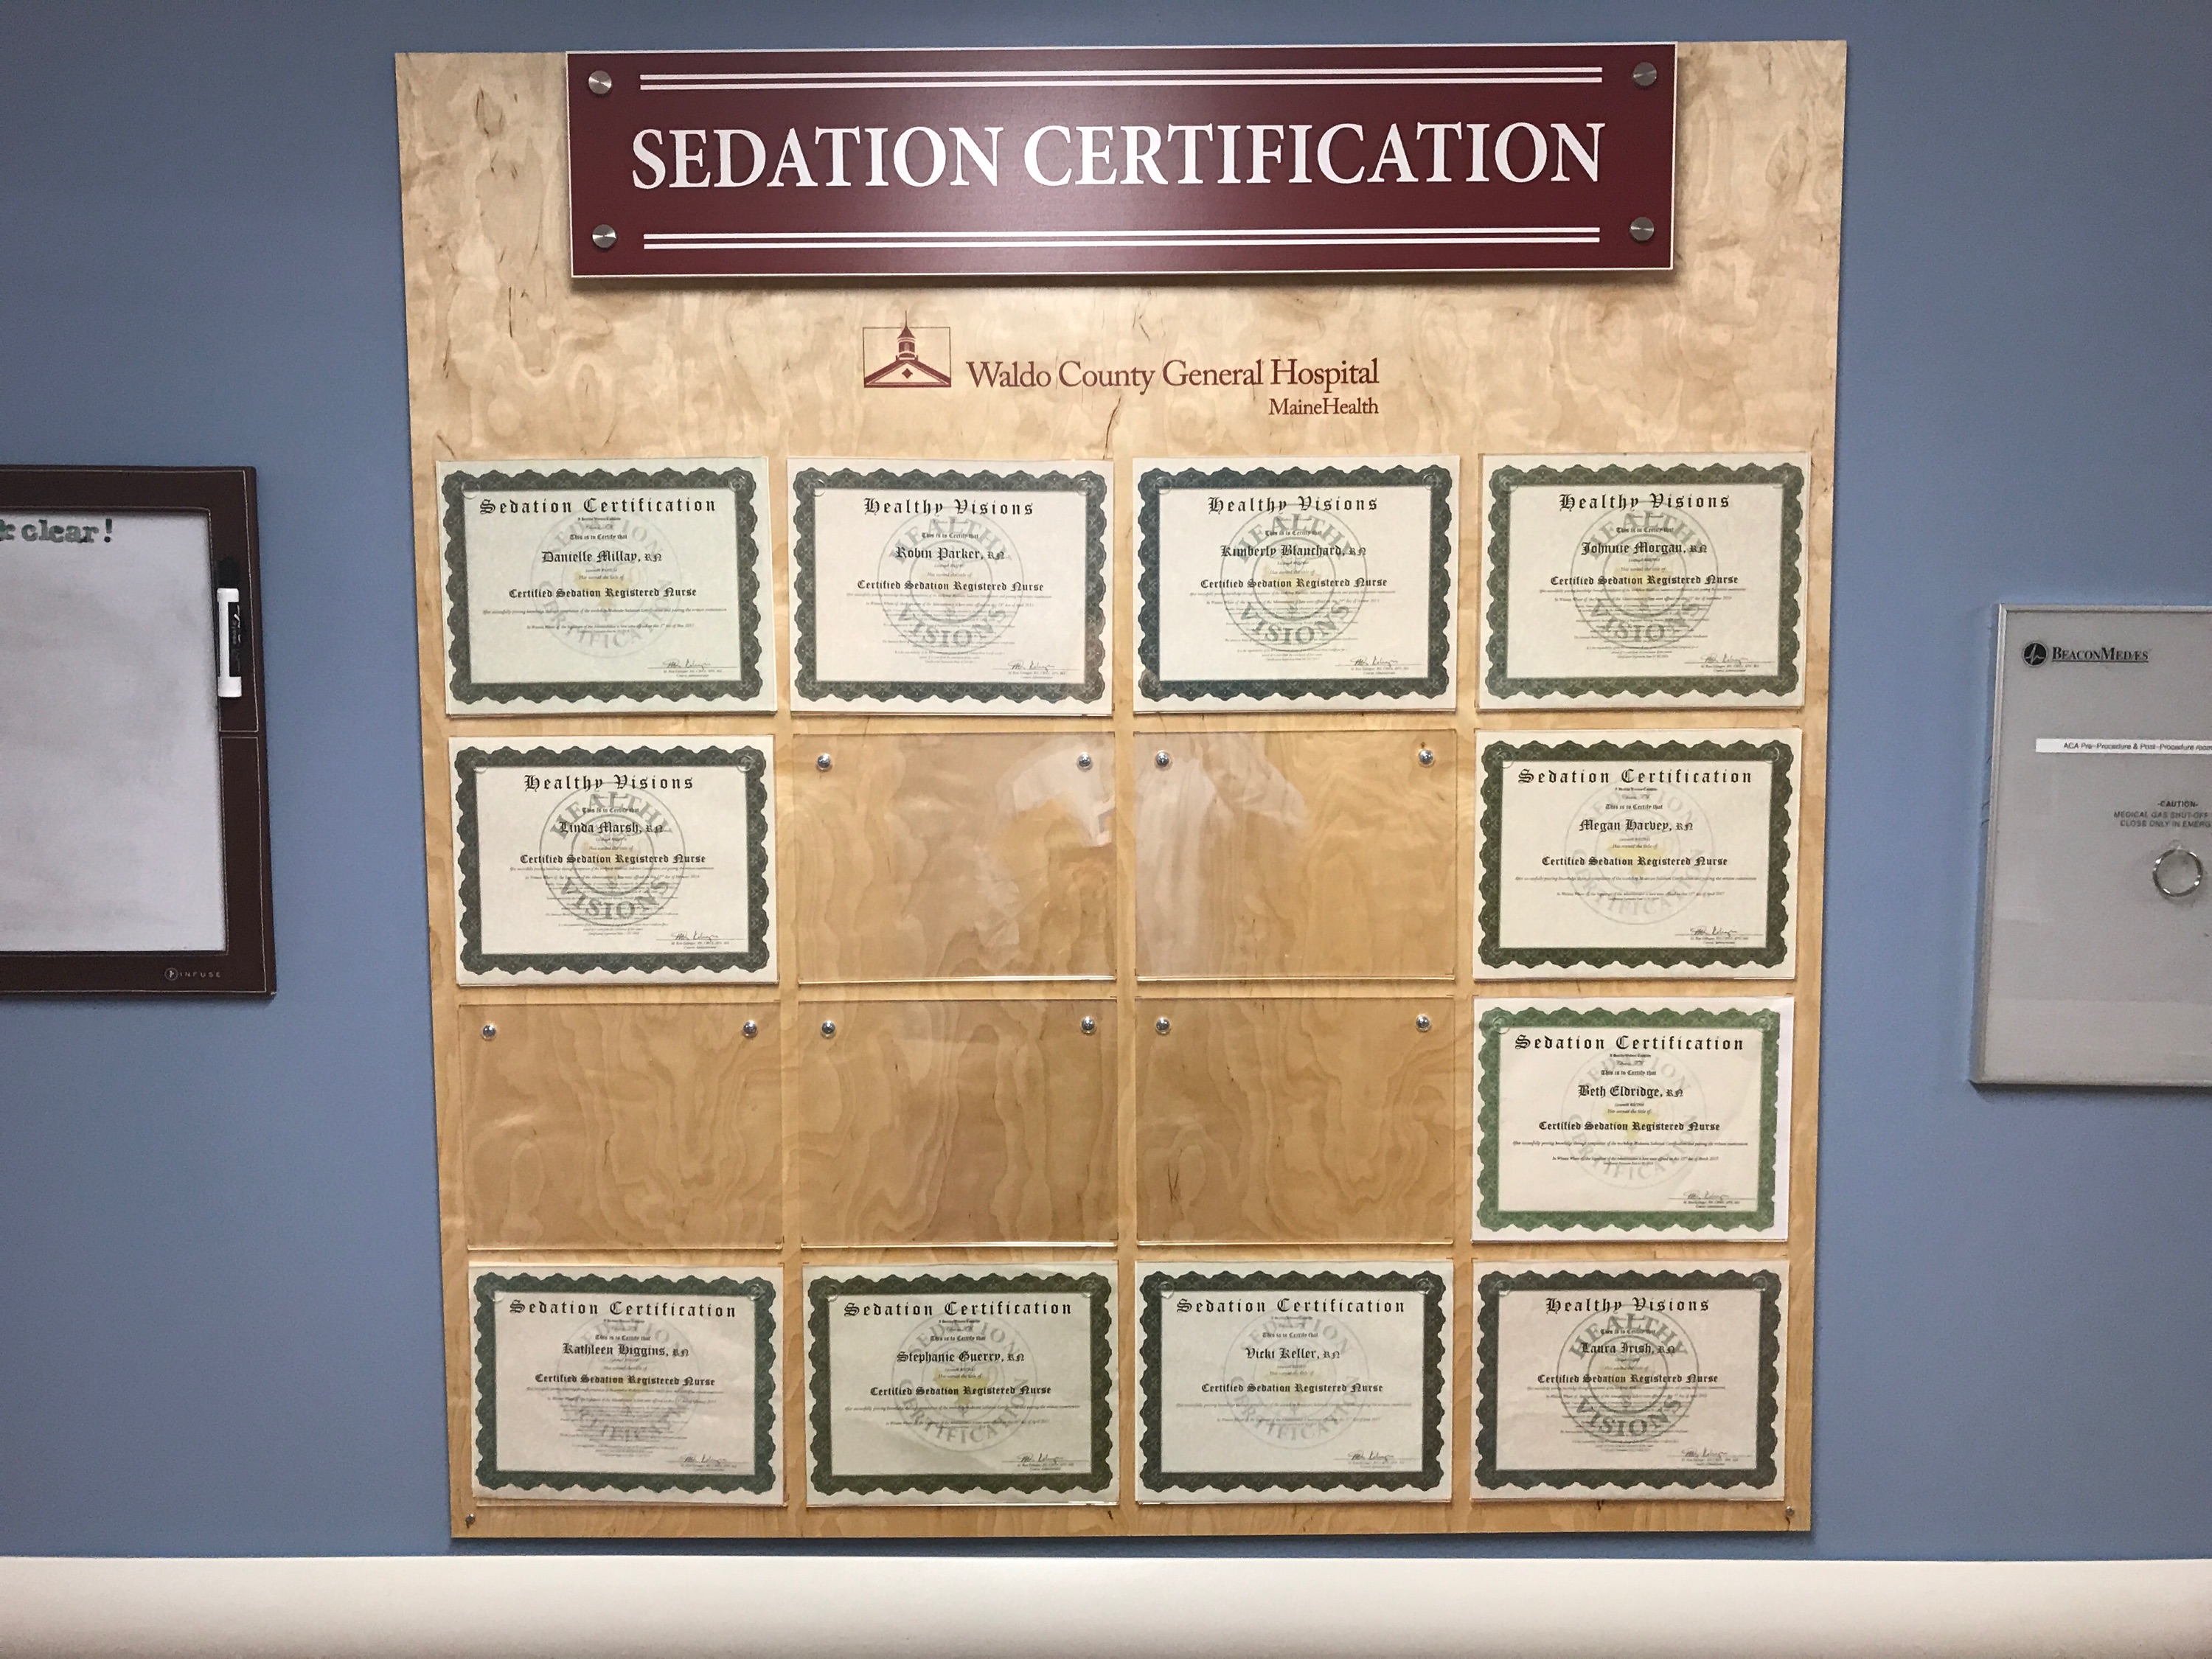 Waldo County General Hospital Information Board for Certifications